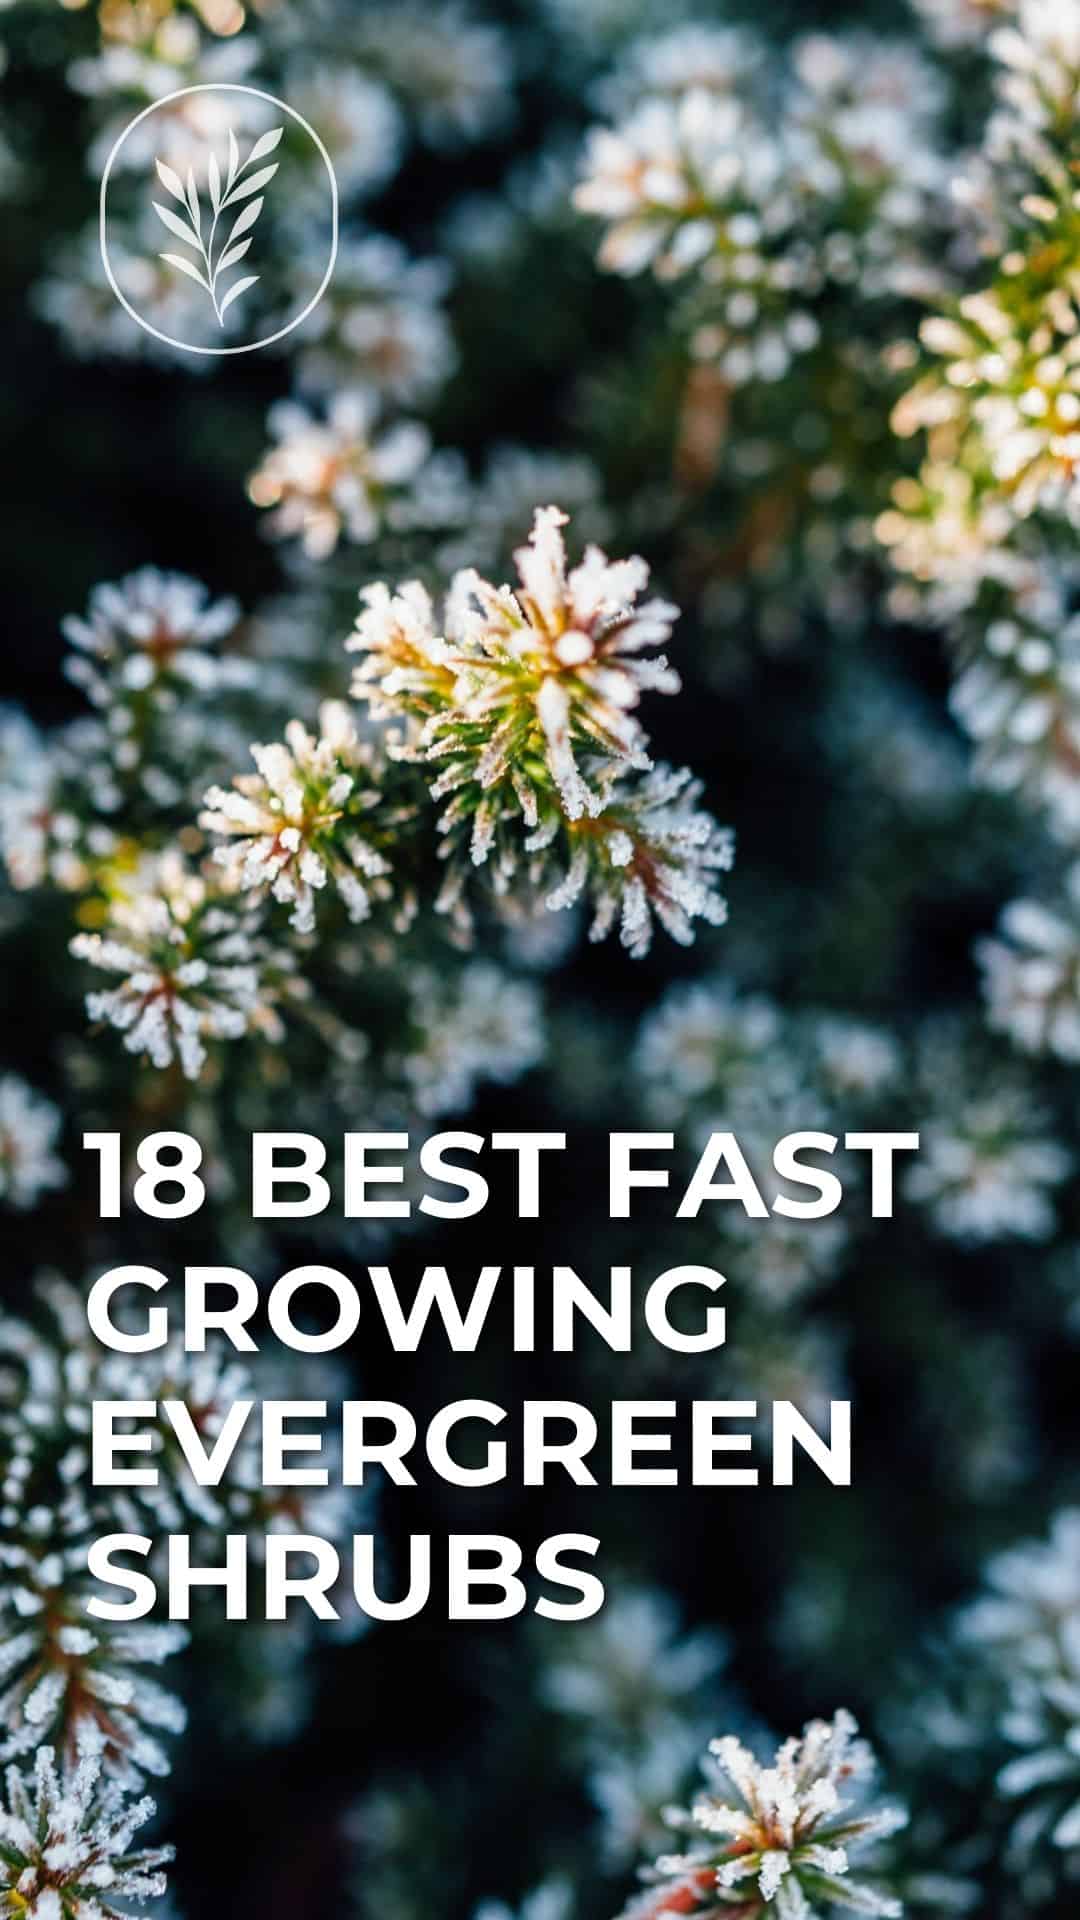 18 best fast growing evergreen shrubs - story via @home4theharvest